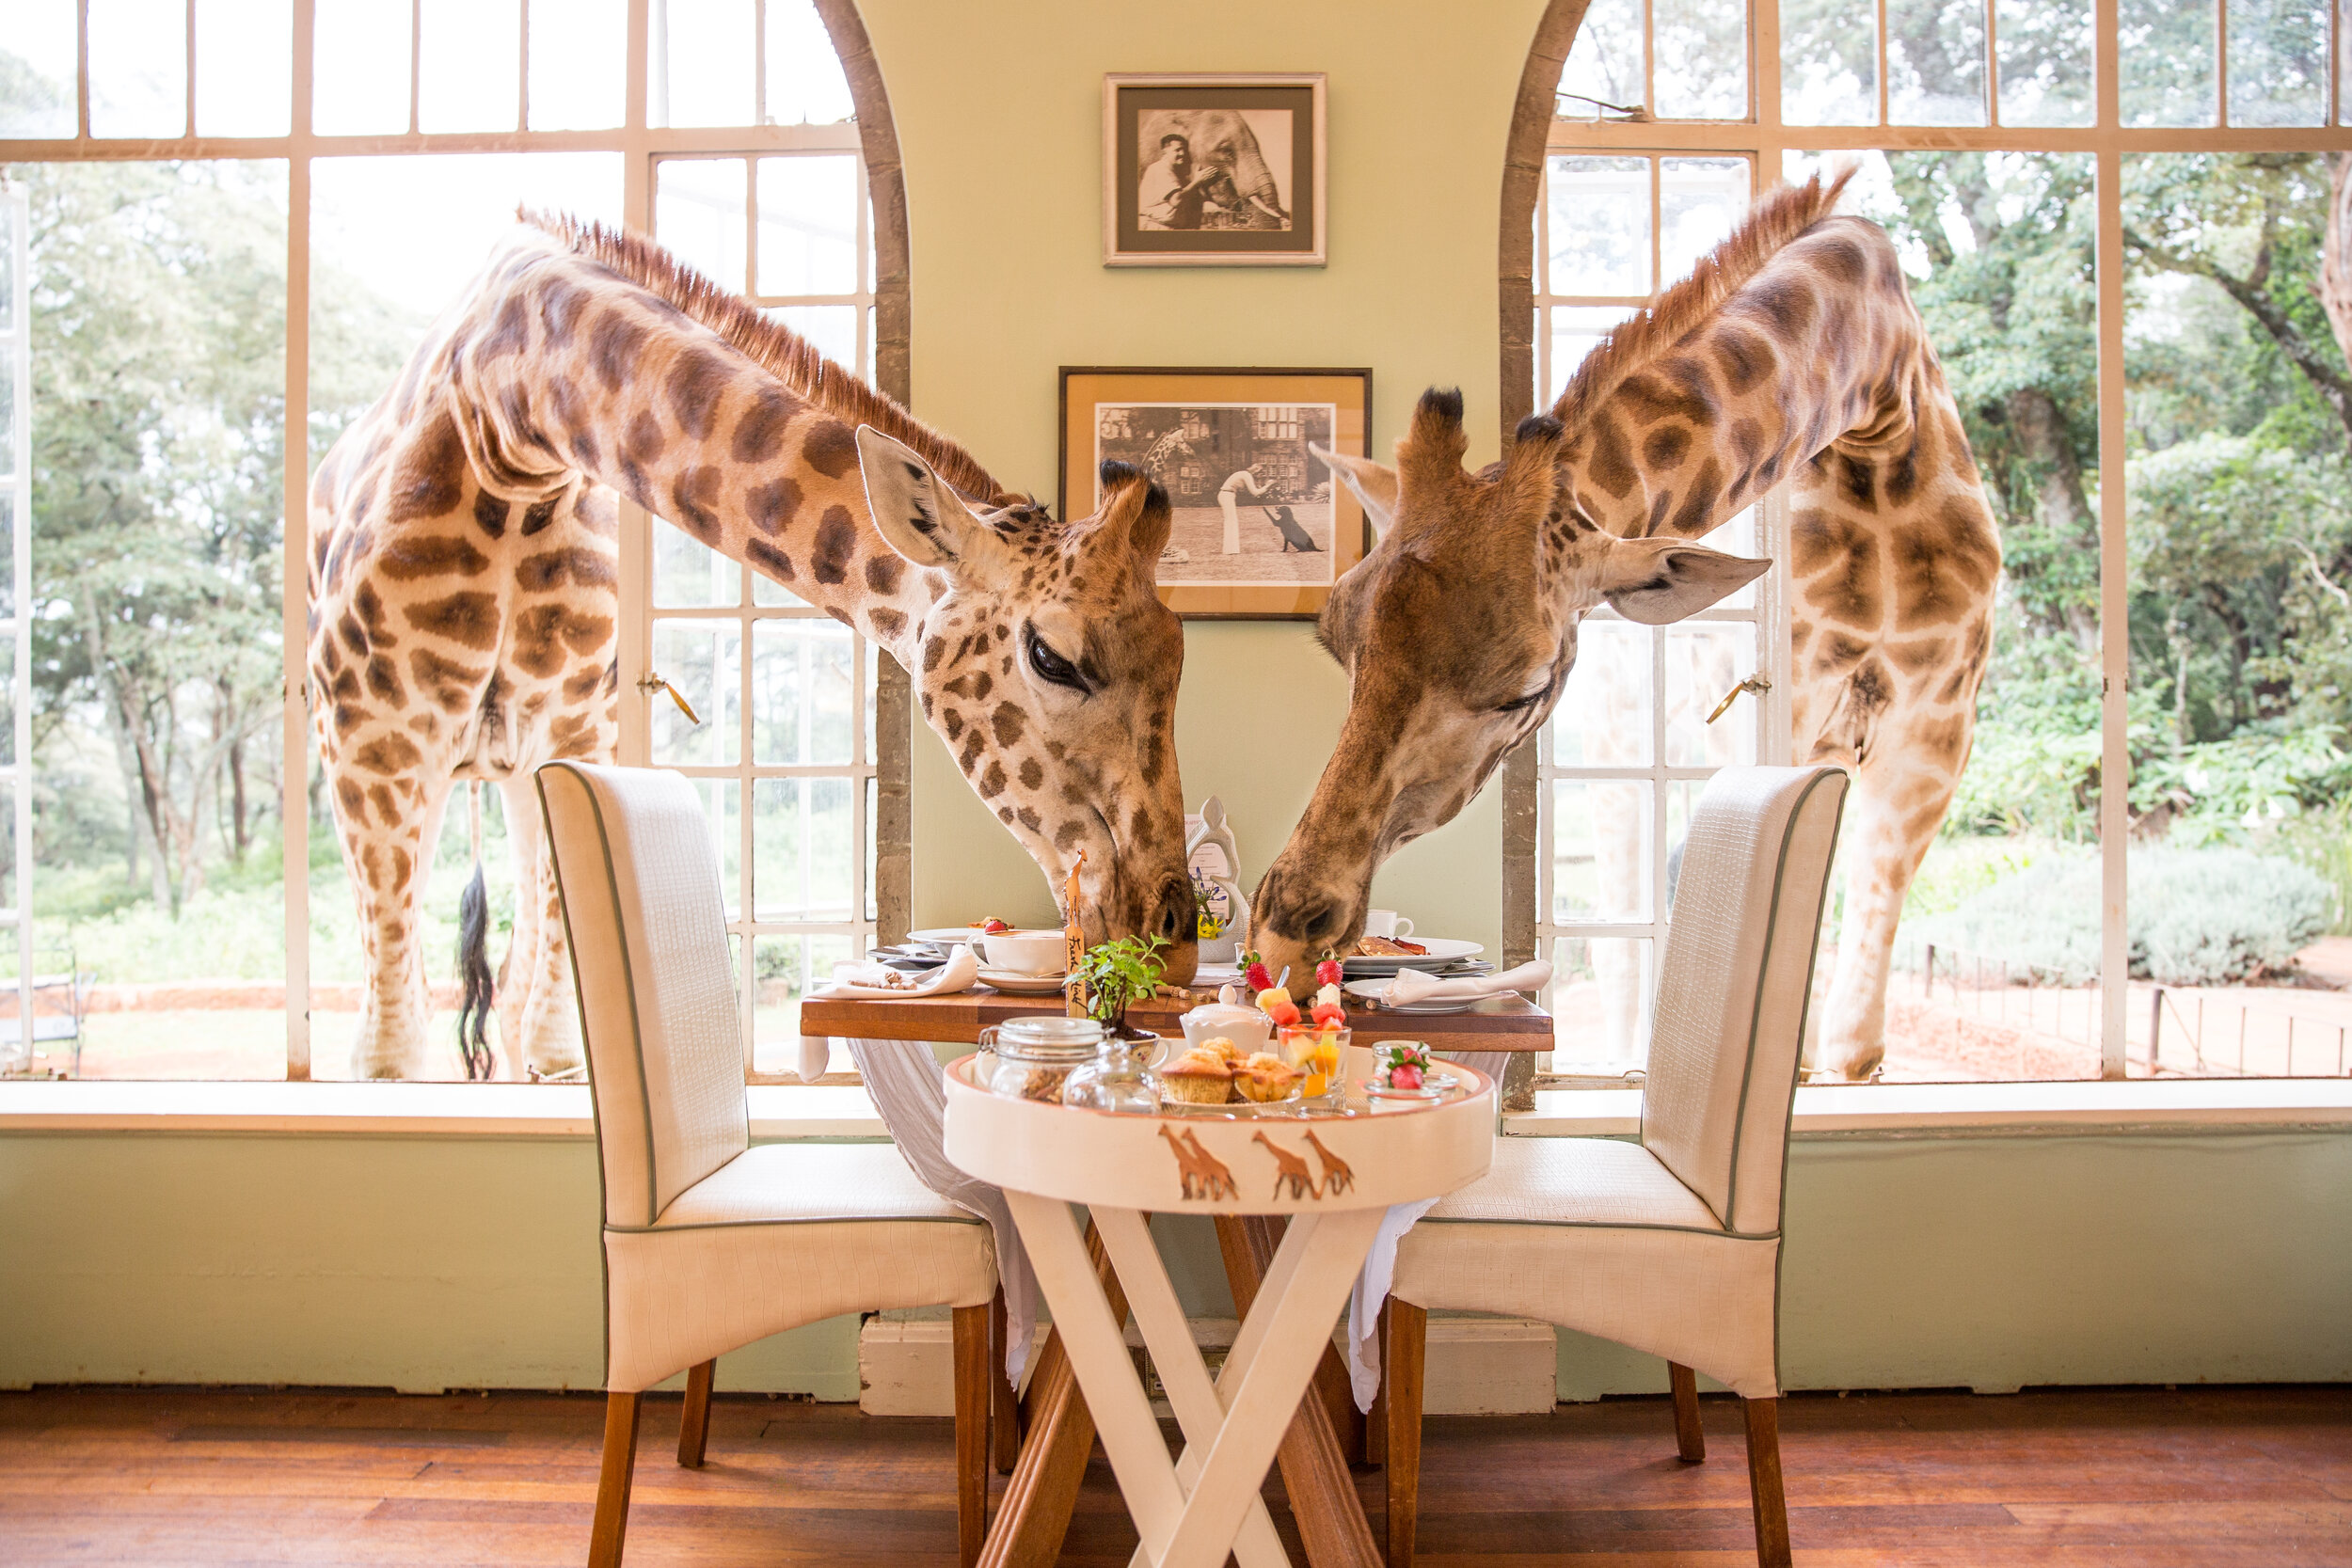   Cheeky giraffes checking in before breakfast (photo credit: Janine Cifelli Representation)  